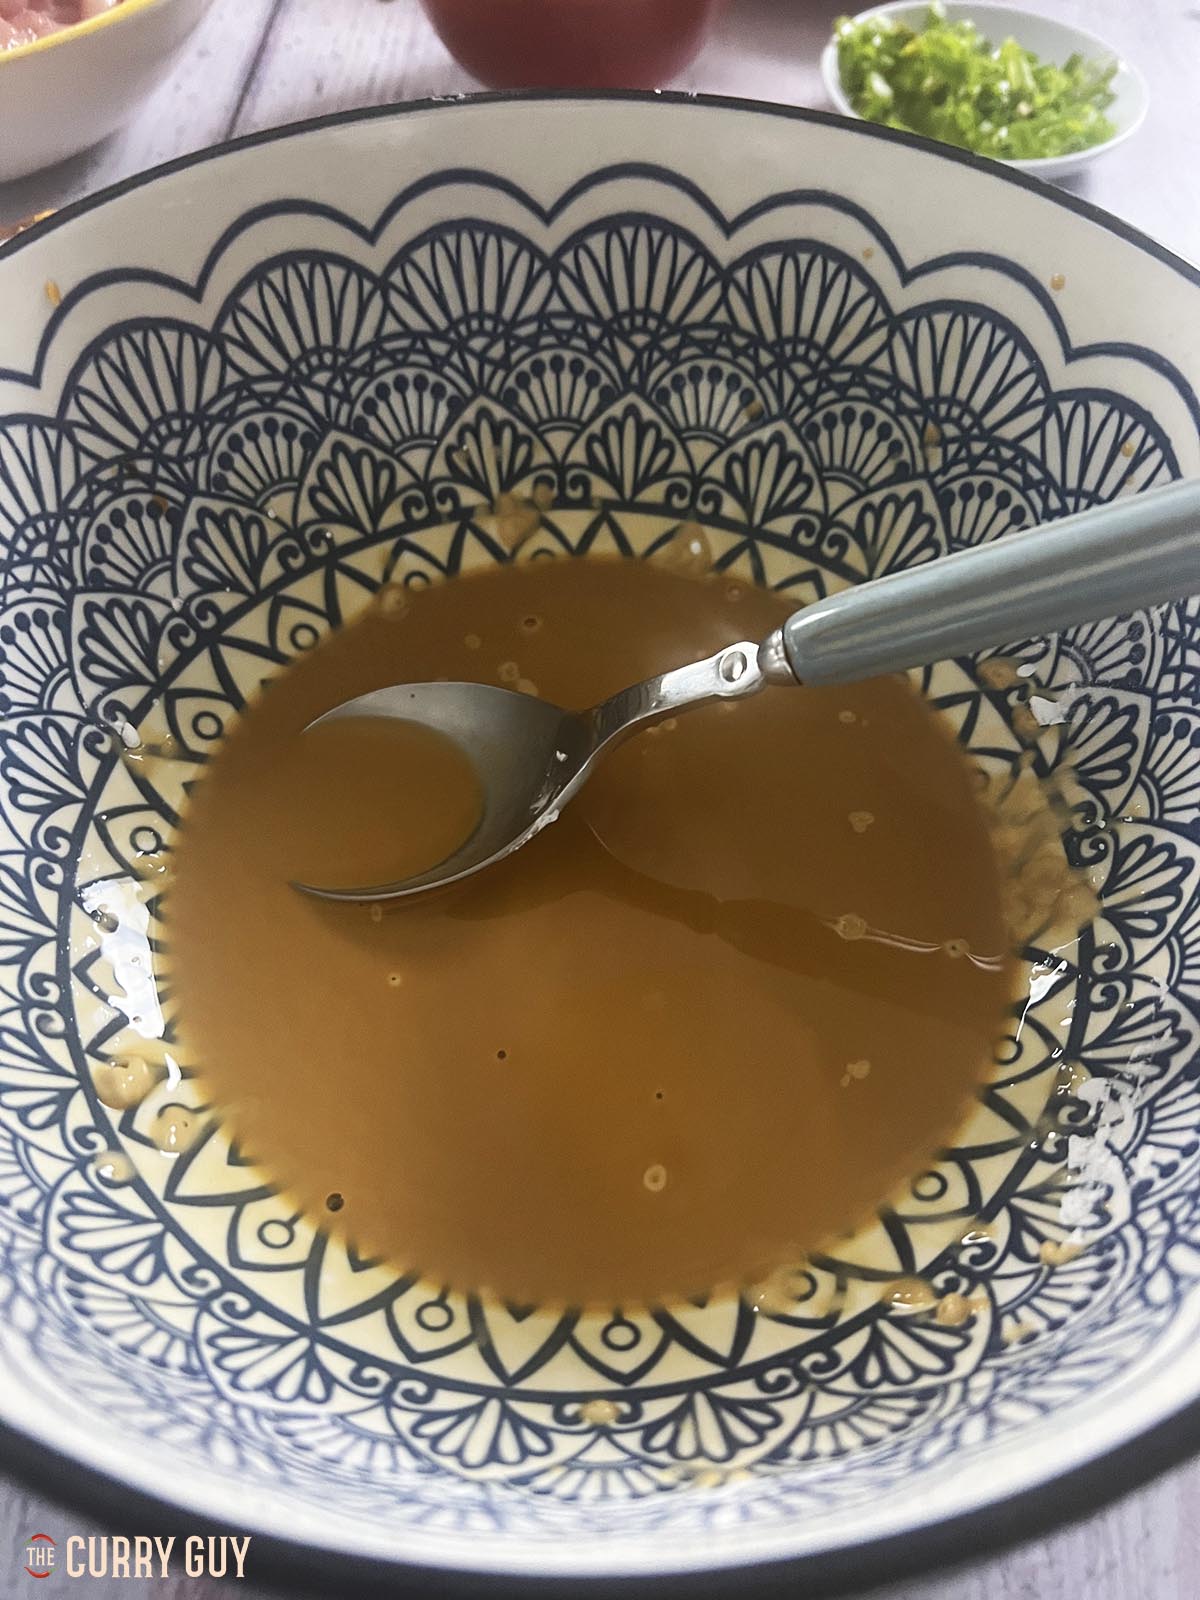 The prepared marinade in a bowl.